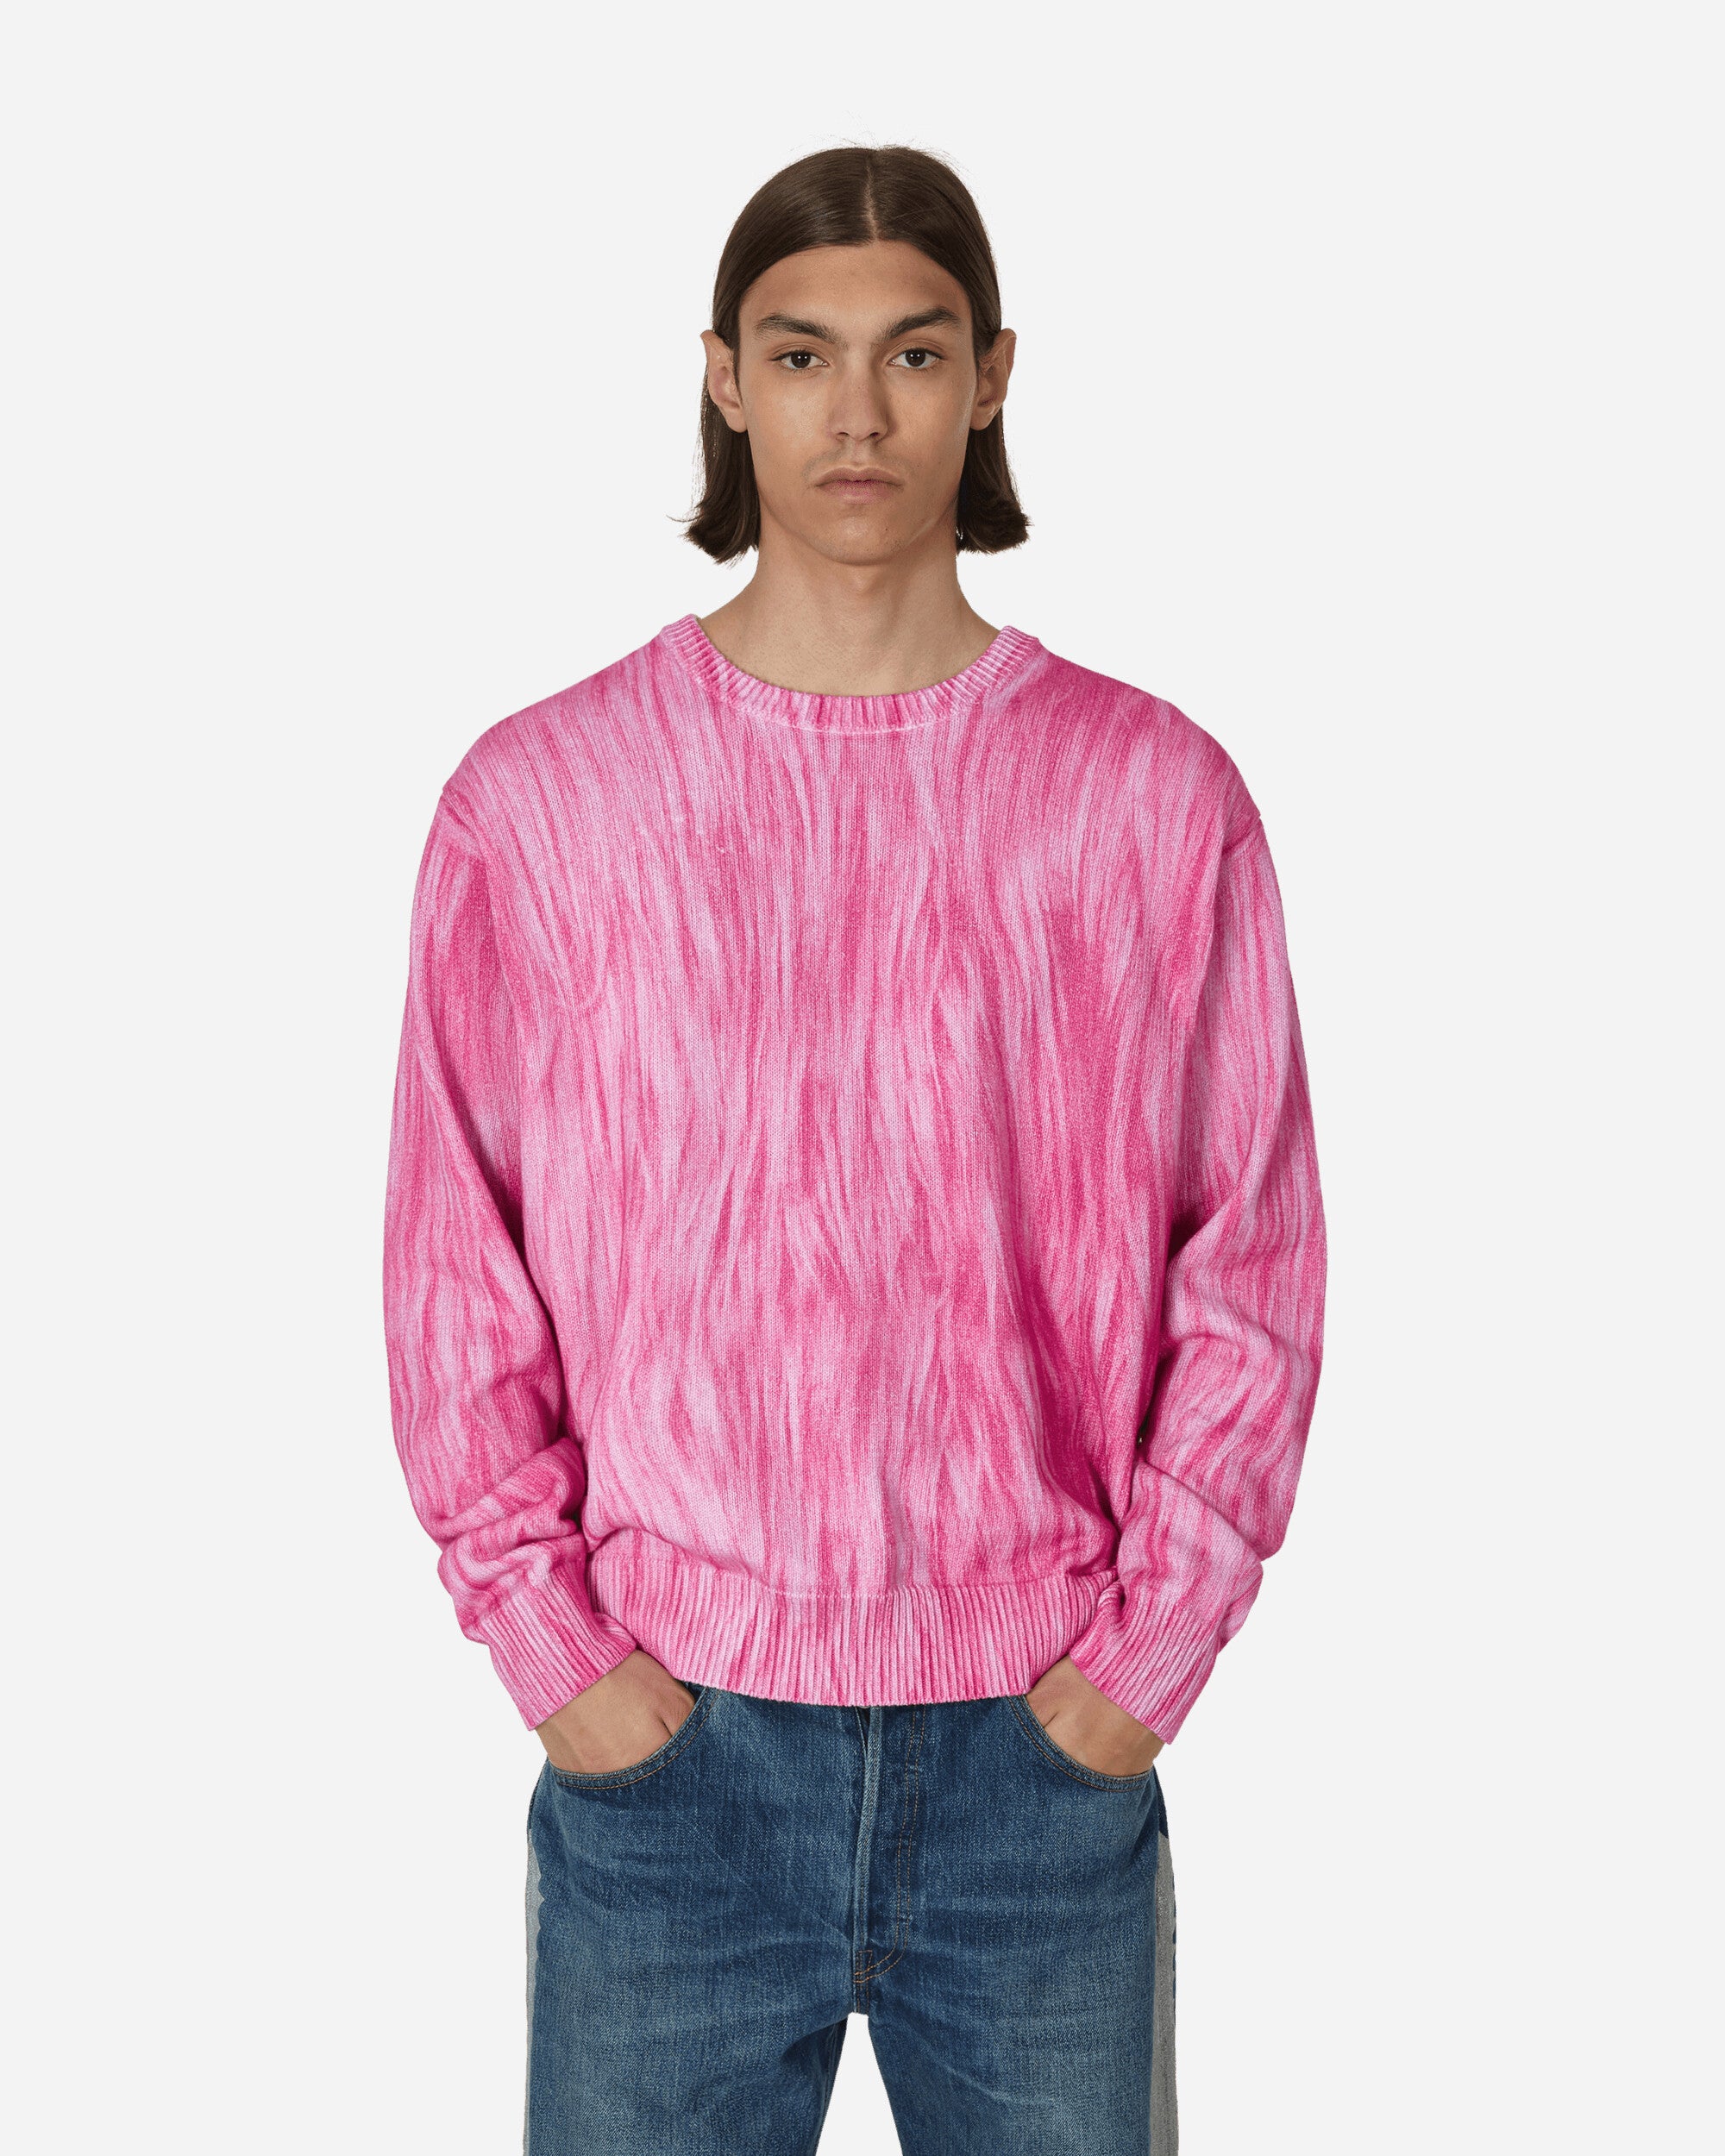 Printed Fur Sweater Pink